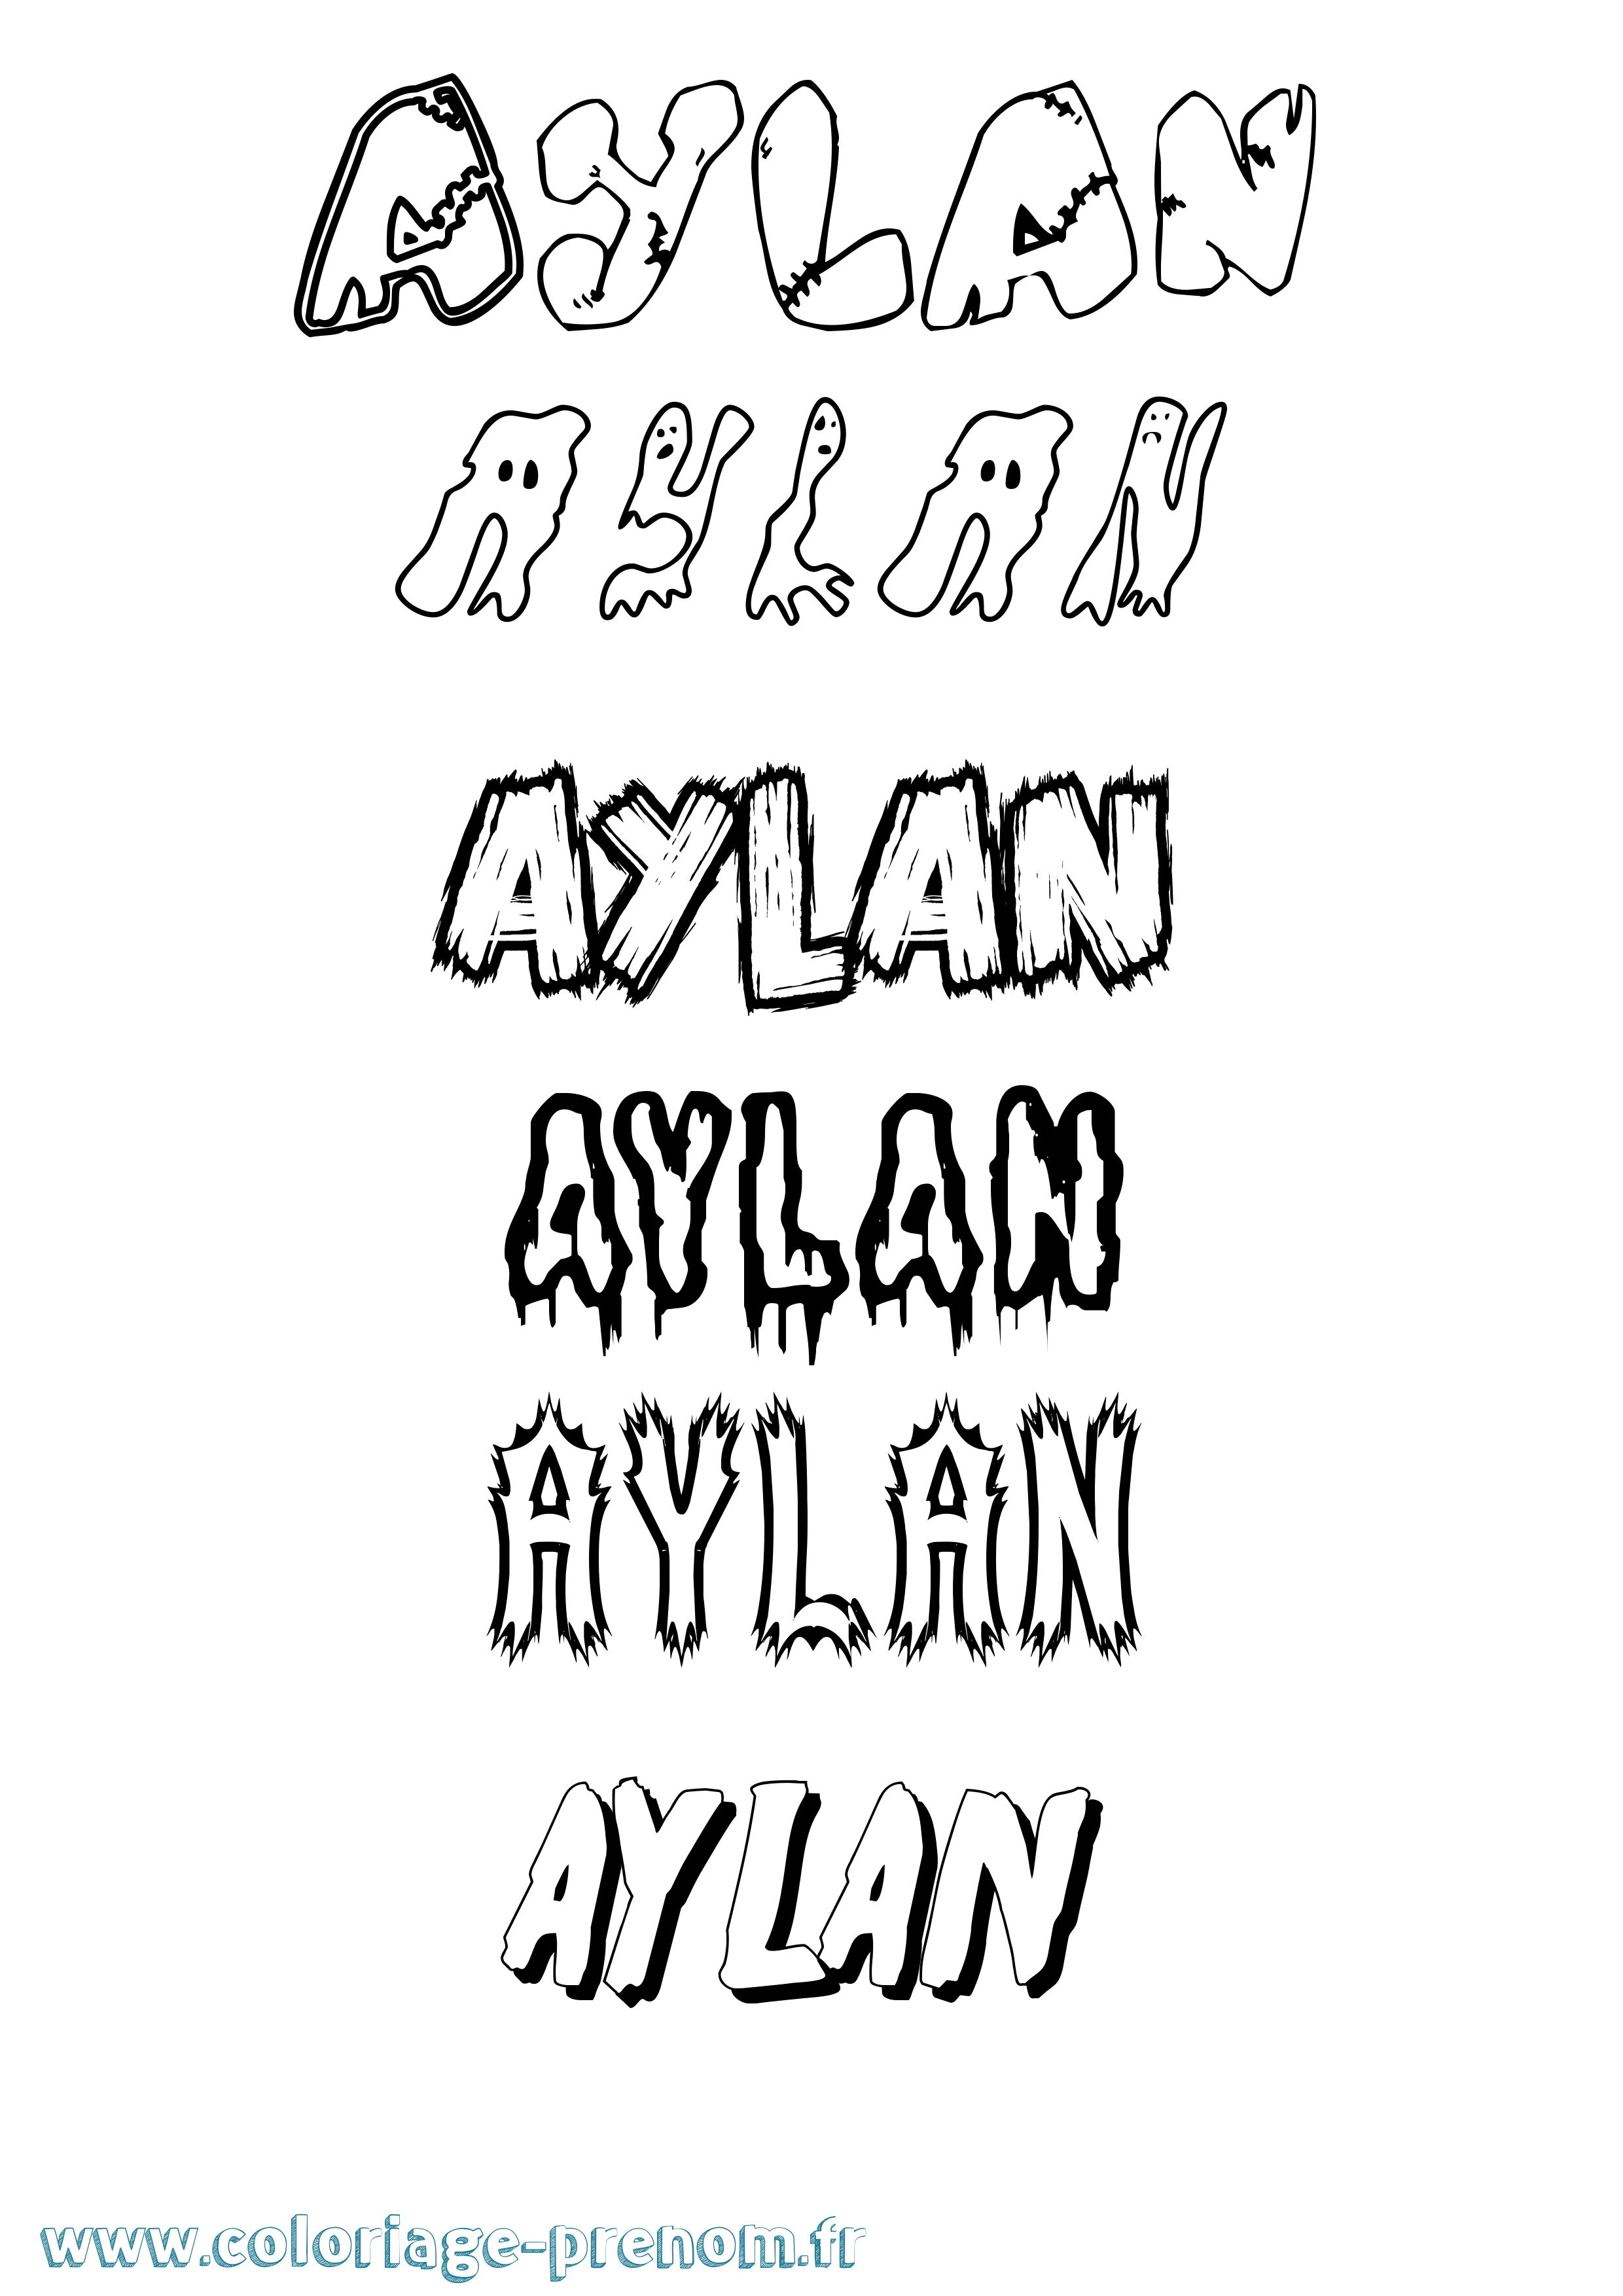 Coloriage prénom Aylan Frisson